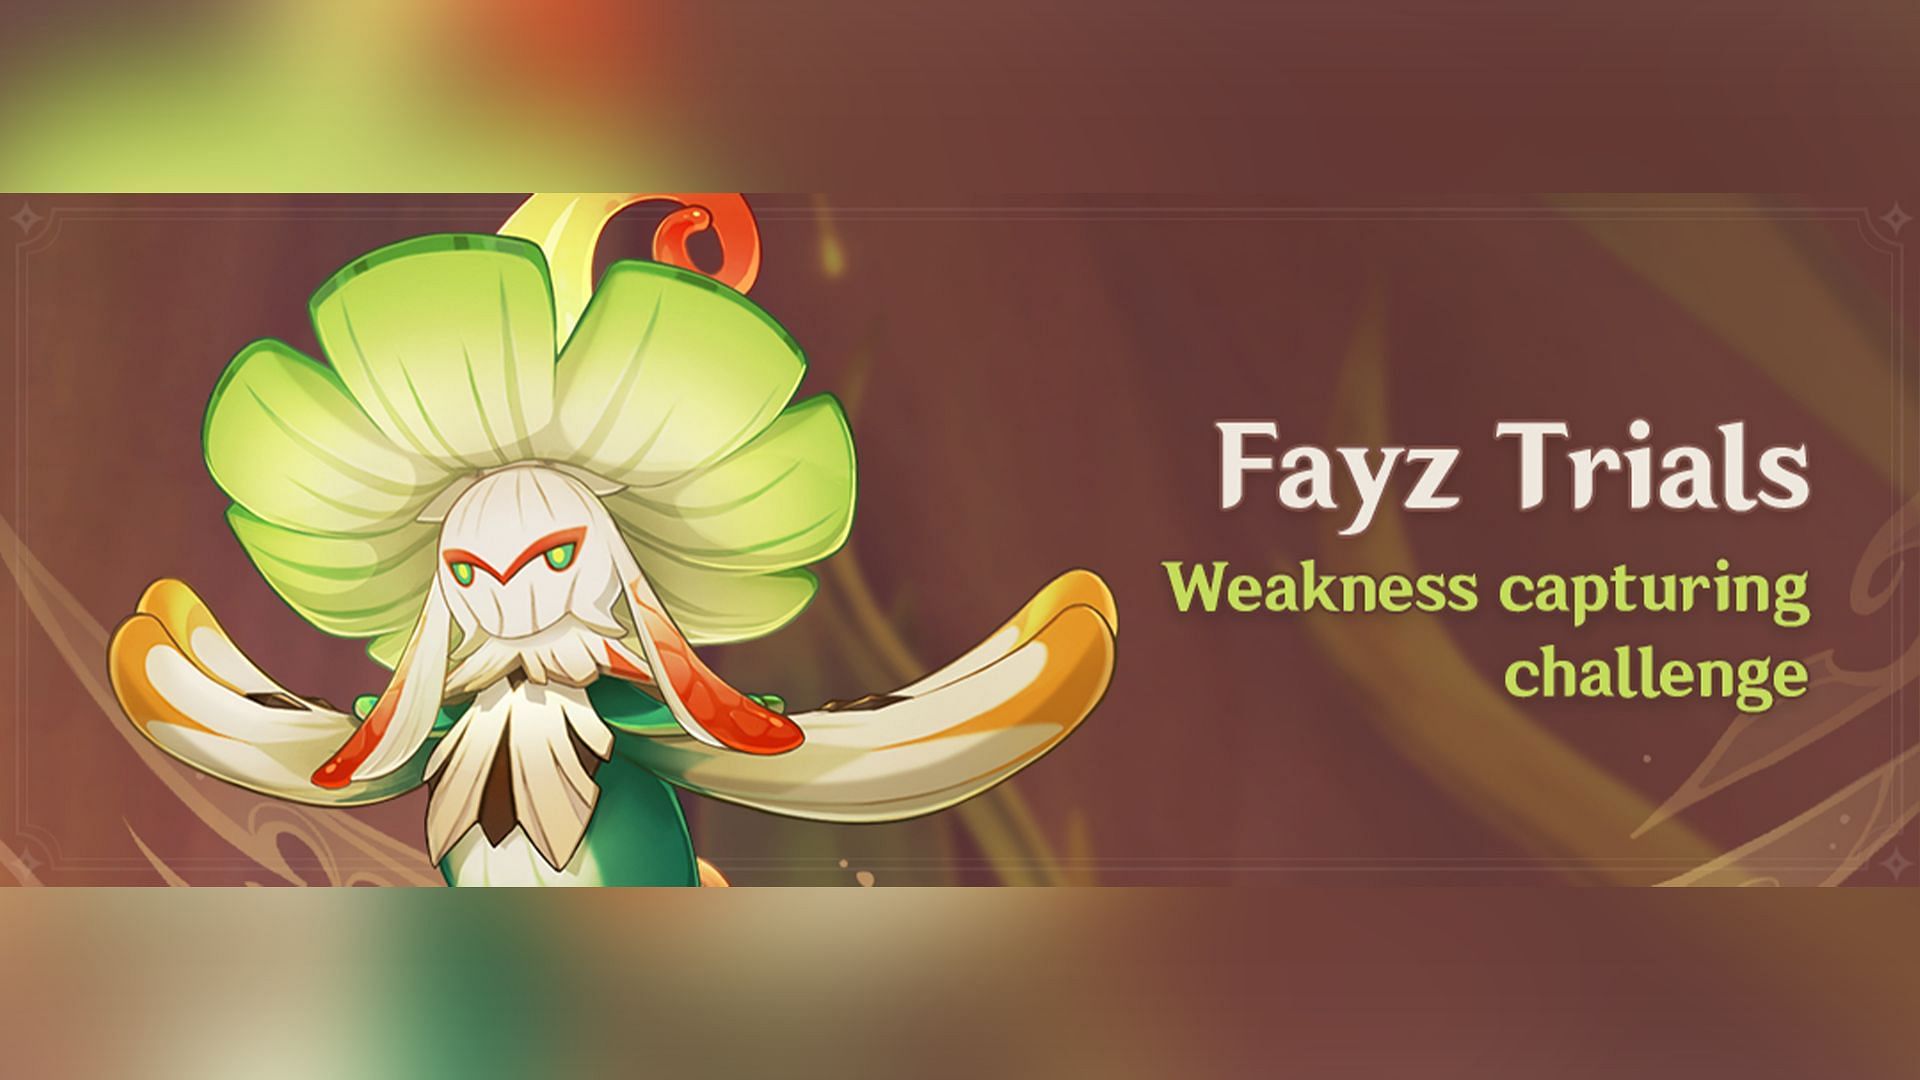 Fayz Trials, a weakness capturing challenge event (Image via HoYoverse)